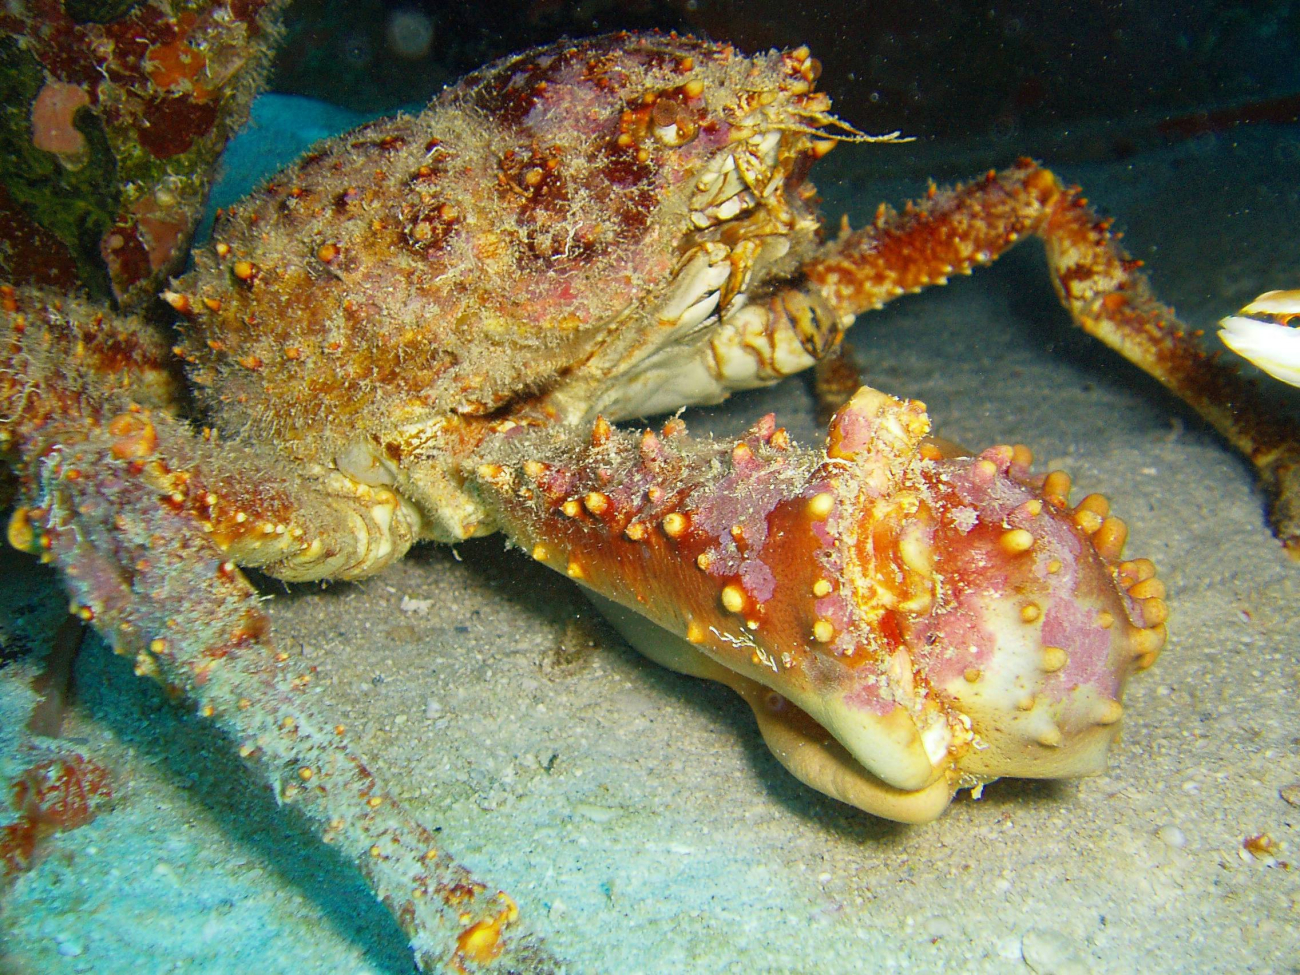 Channel crab